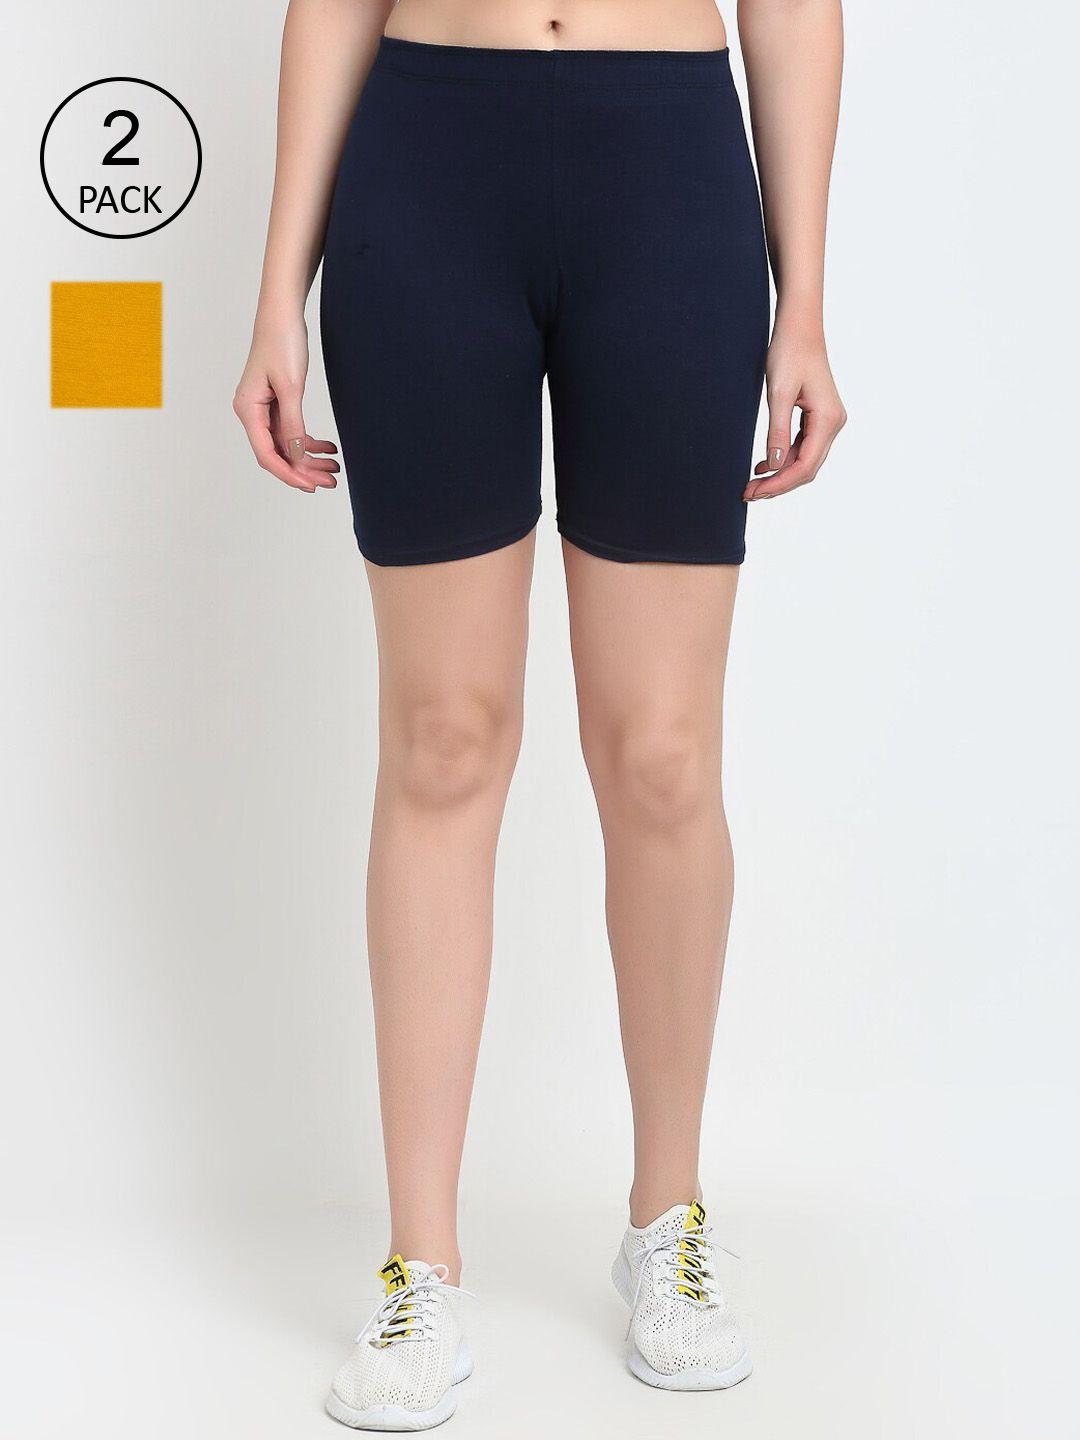 GRACIT Women Set Of 2 Navy Blue & Yellow Slim Fit Cycling Sports Shorts